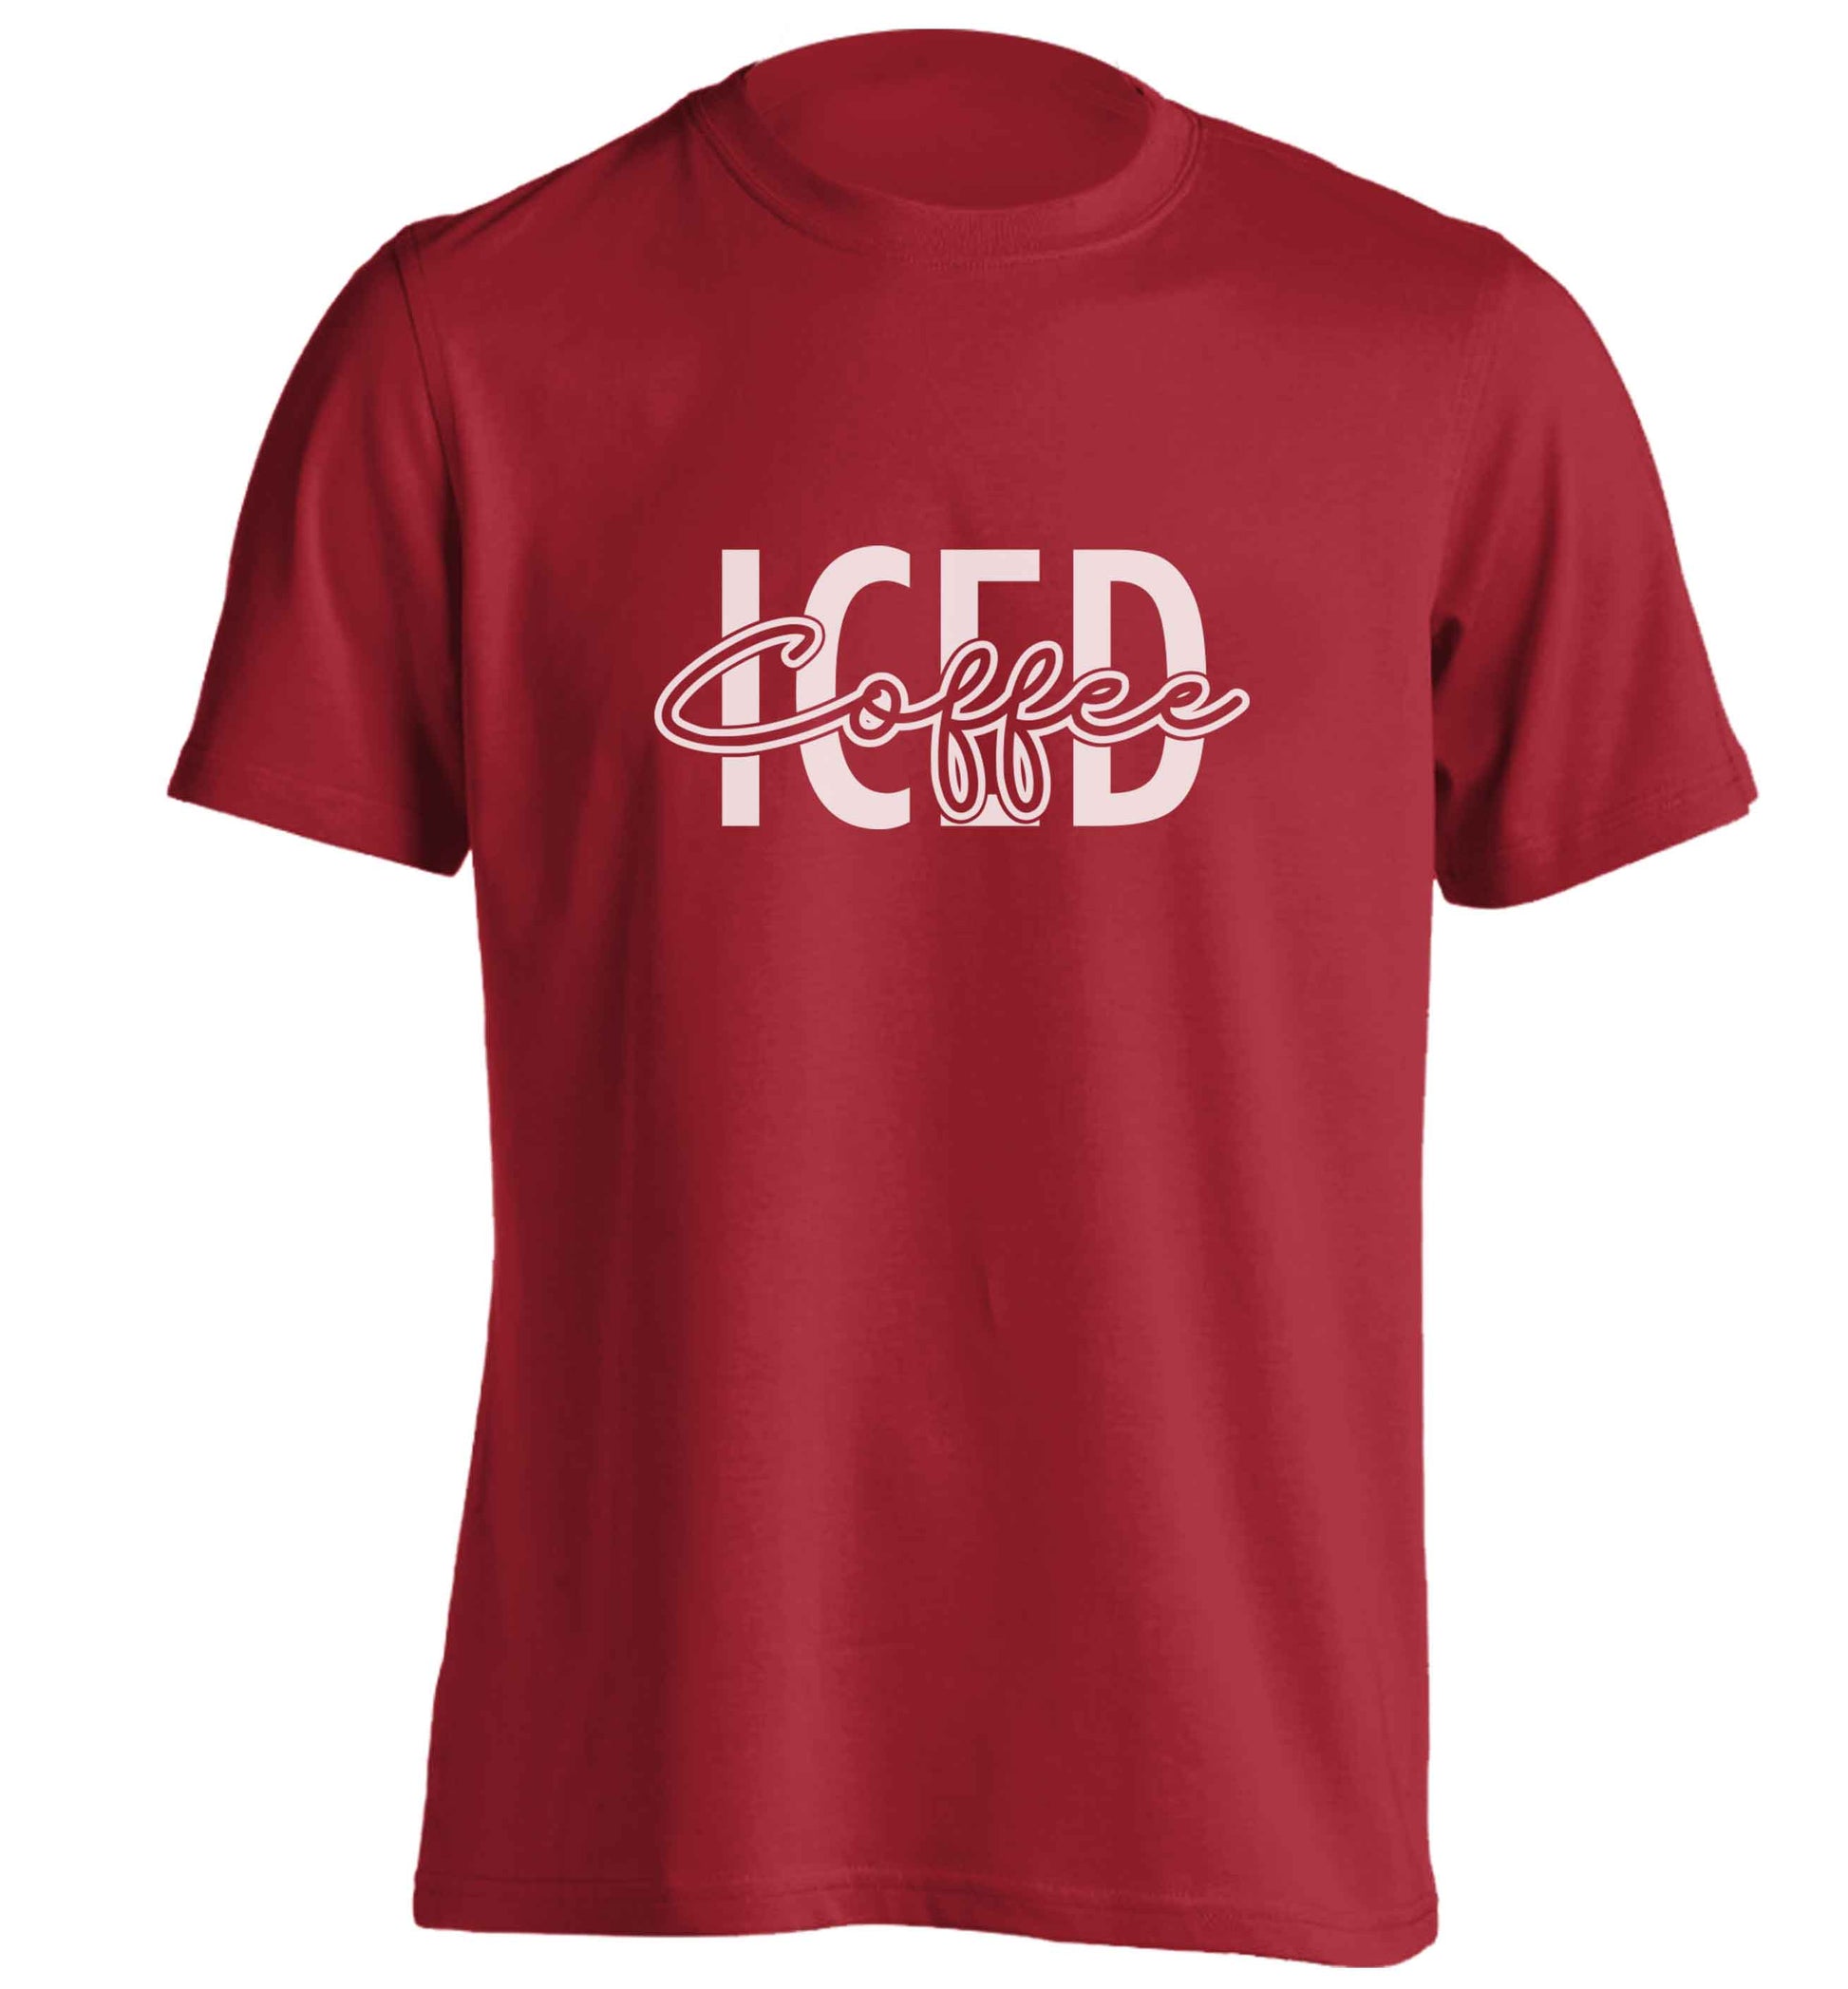 Iced Coffee adults unisex red Tshirt 2XL